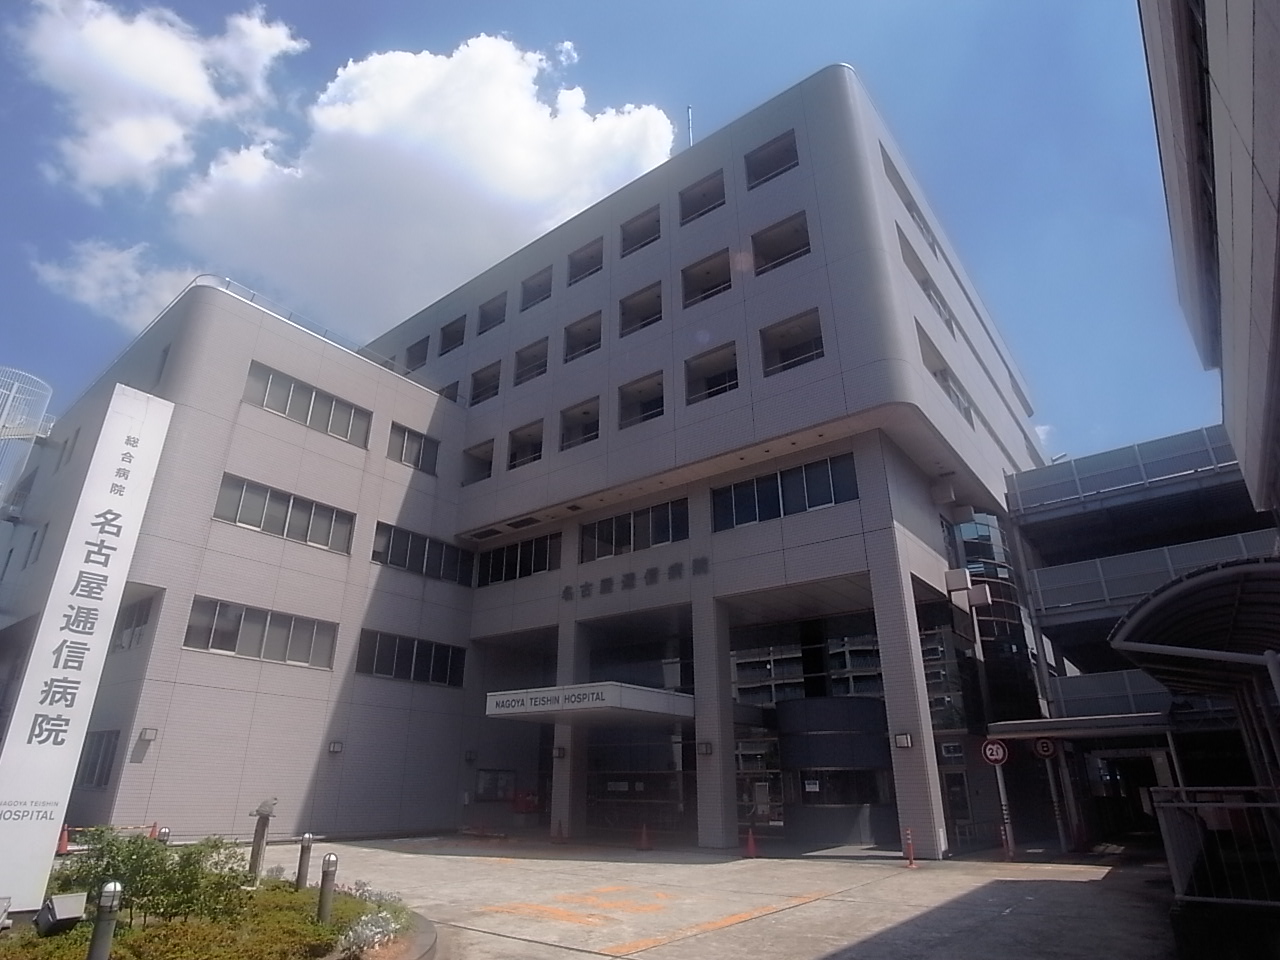 Hospital. 1600m to Nagoya the Communications Hospital (General Hospital) (hospital)